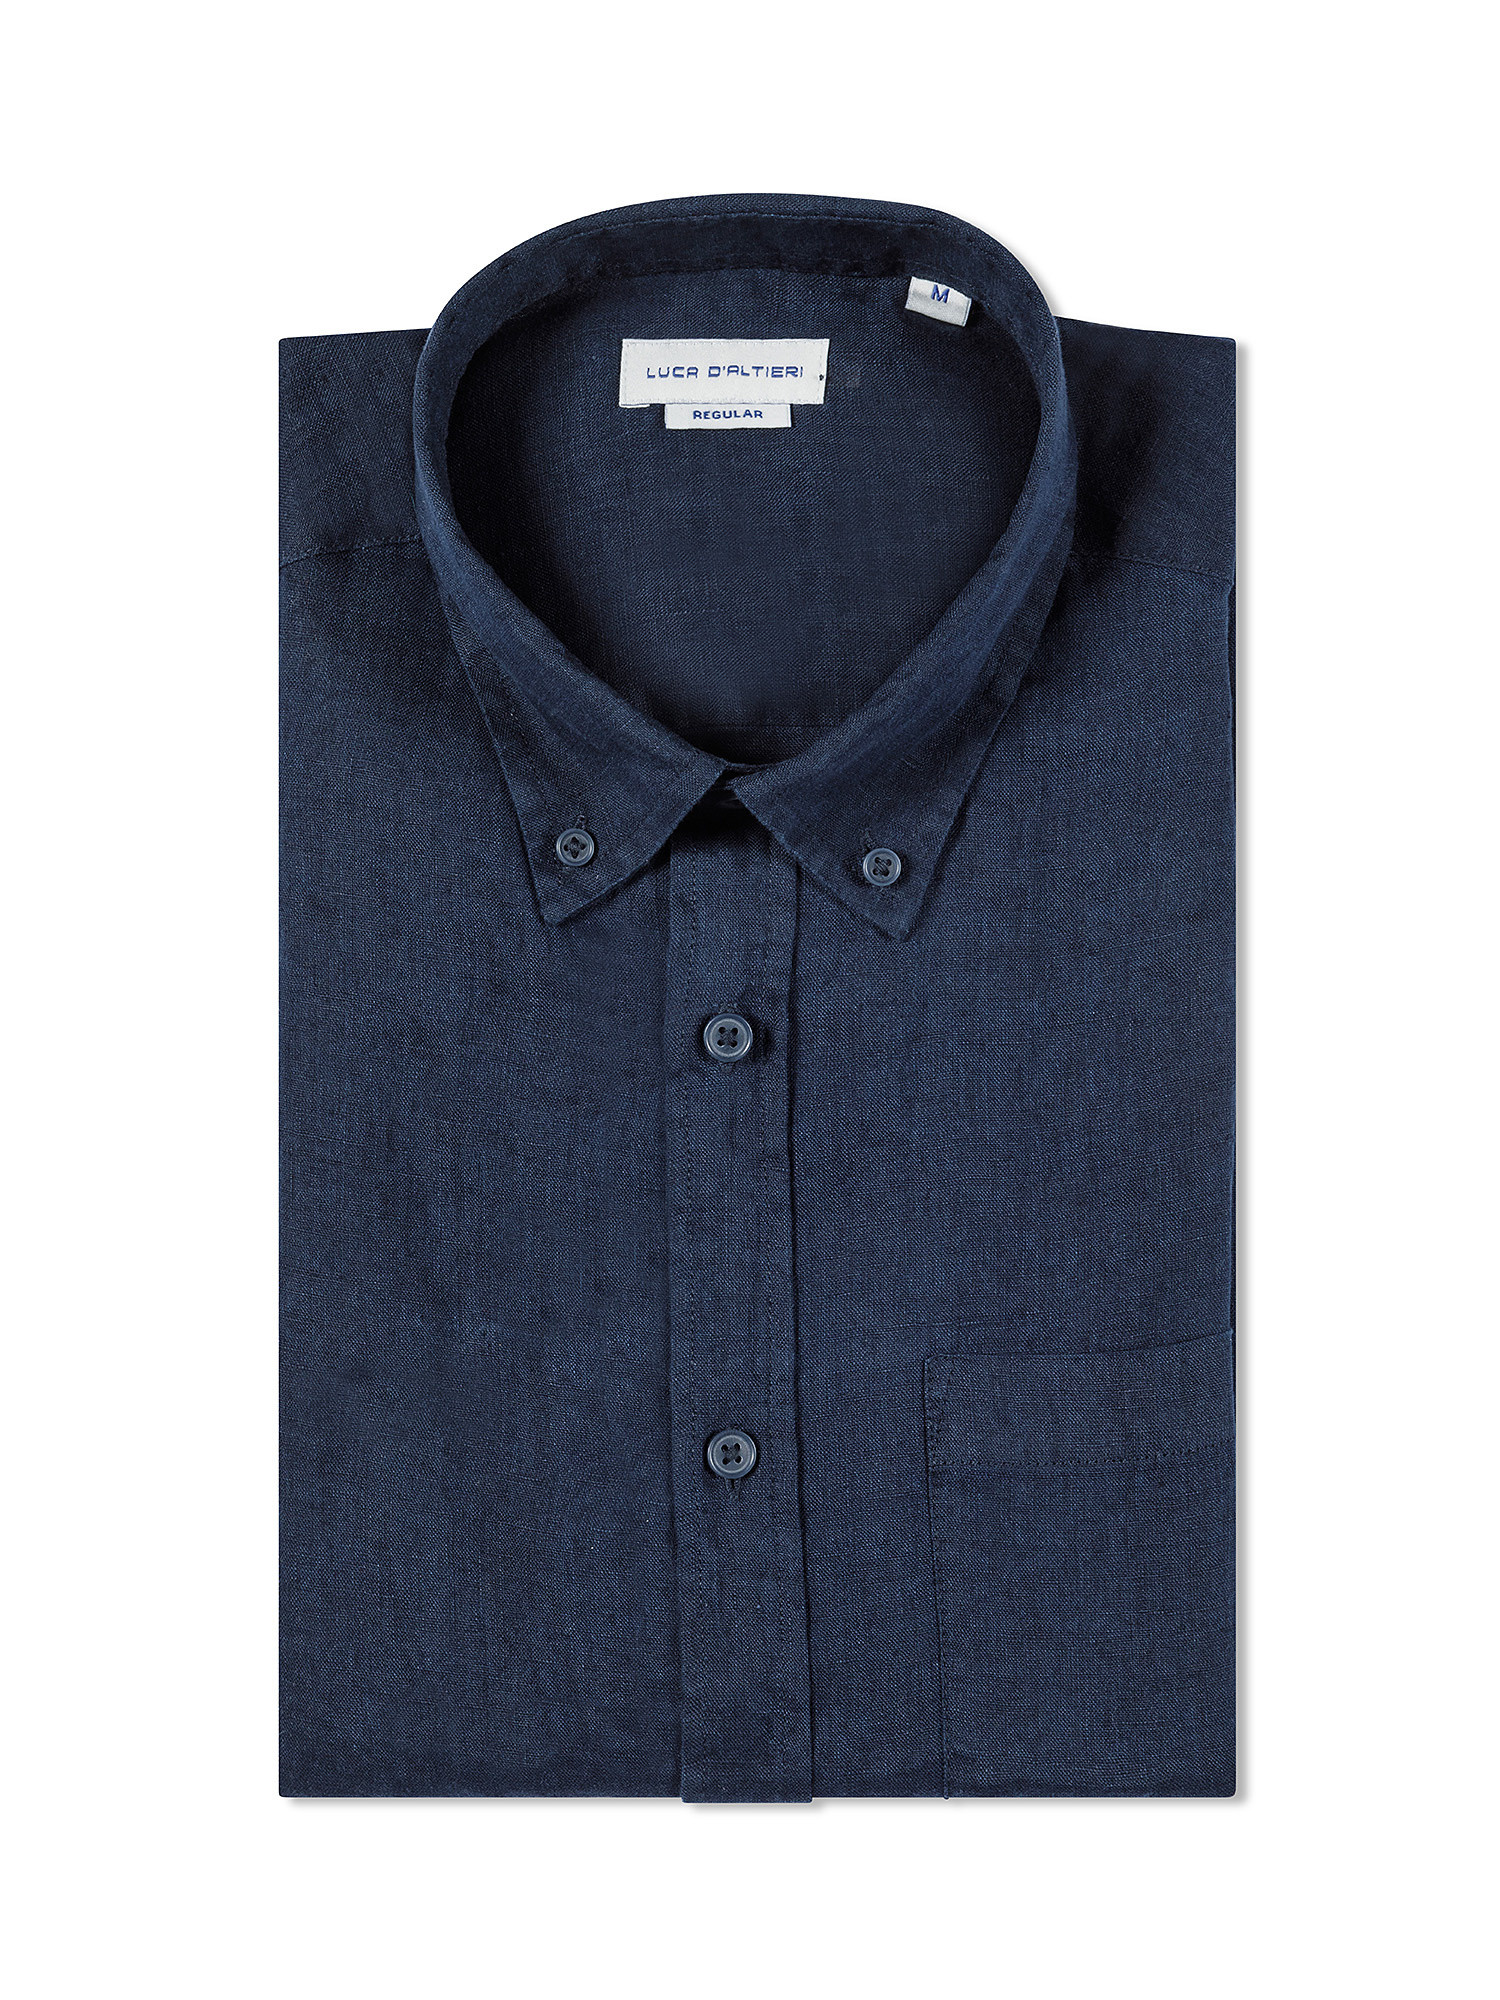 Luca D'Altieri - Camicia regular fit in puro lino, Blu, large image number 2